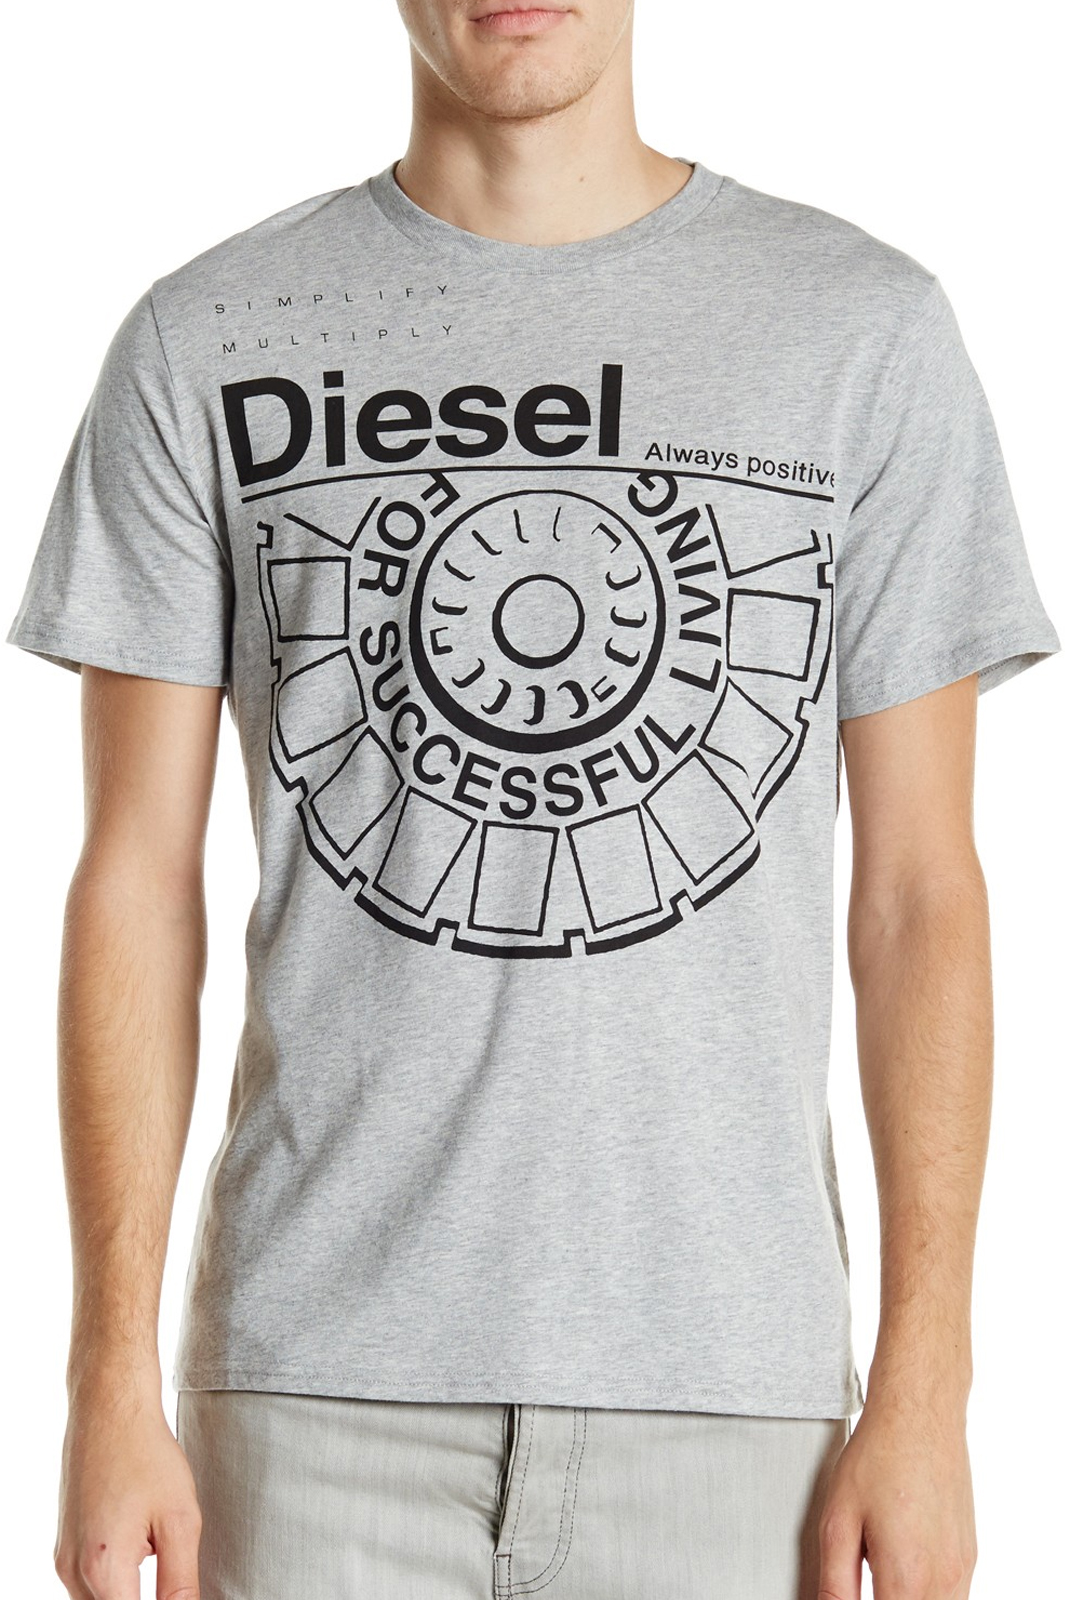 Tee-shirt gris coton manches Courtes Diesel homme - Ballock